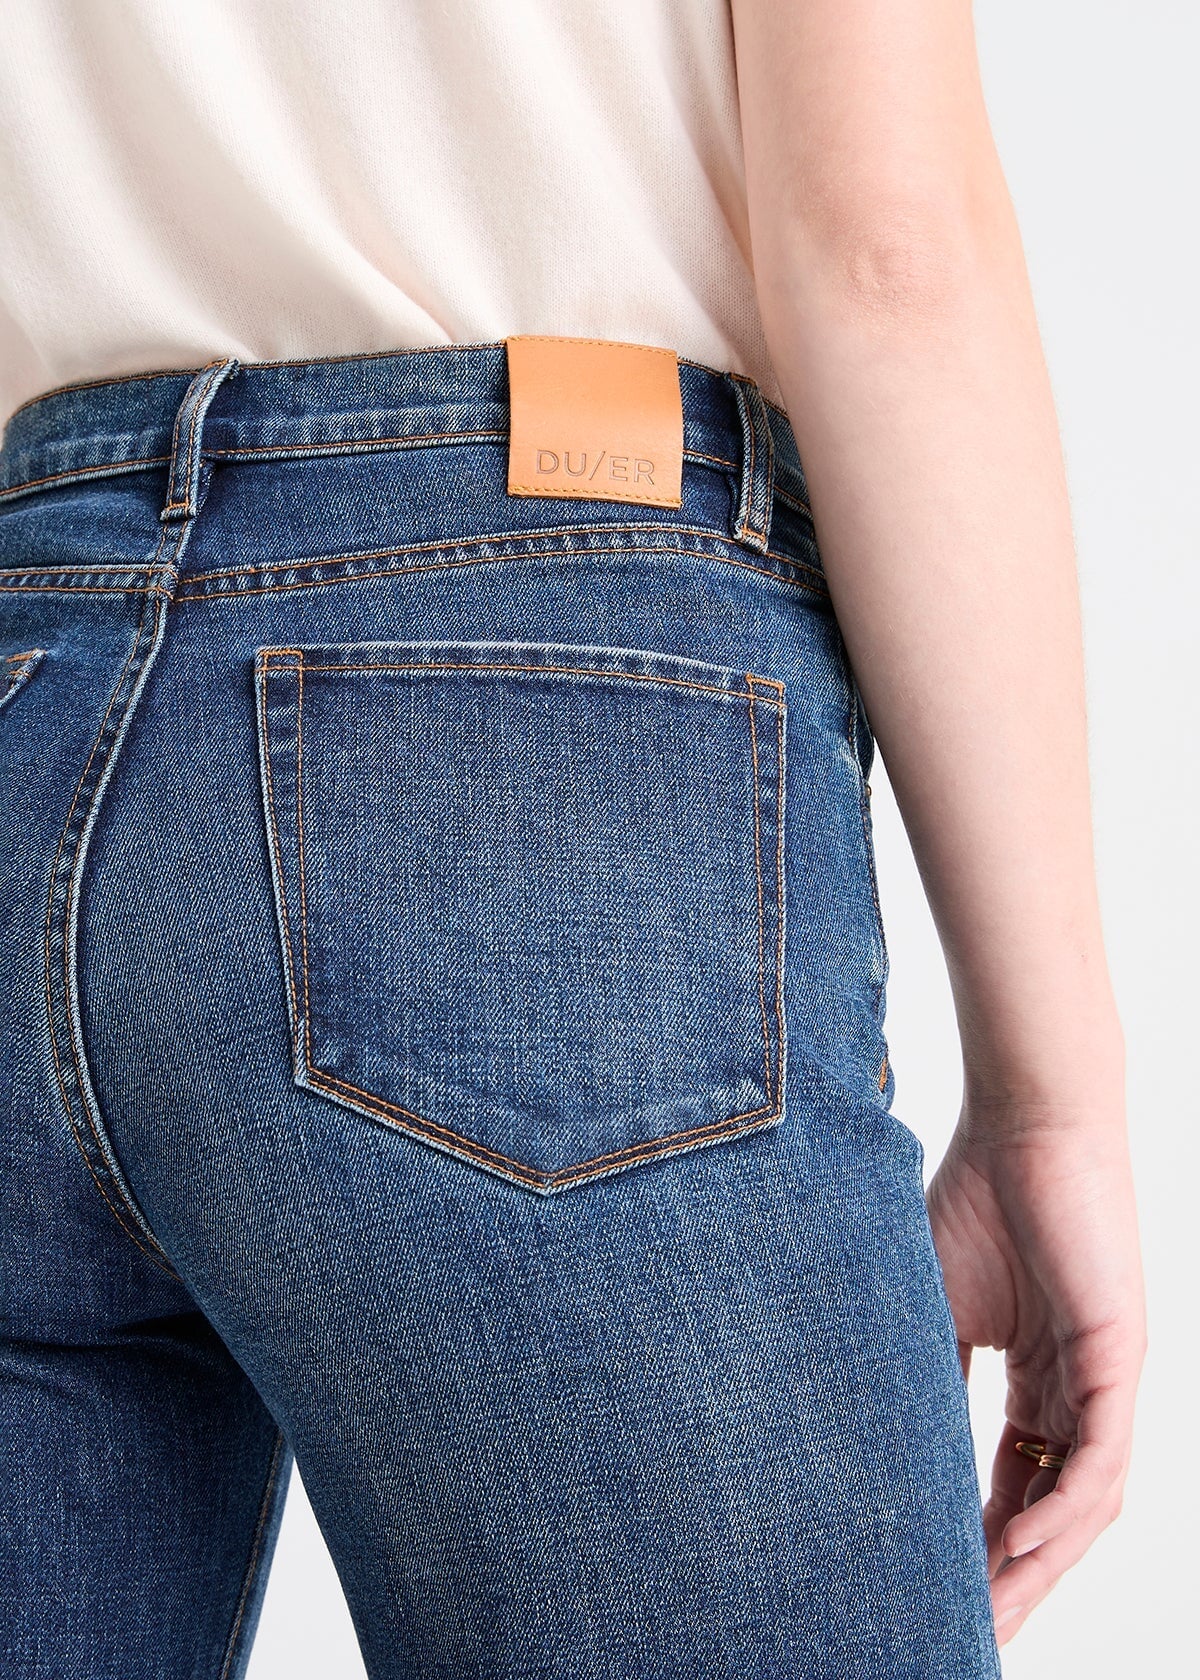 Earl Jeans Womens Sz 9 Straight Leg Designer Jeans: Dark Blue Wash Stone  Studded